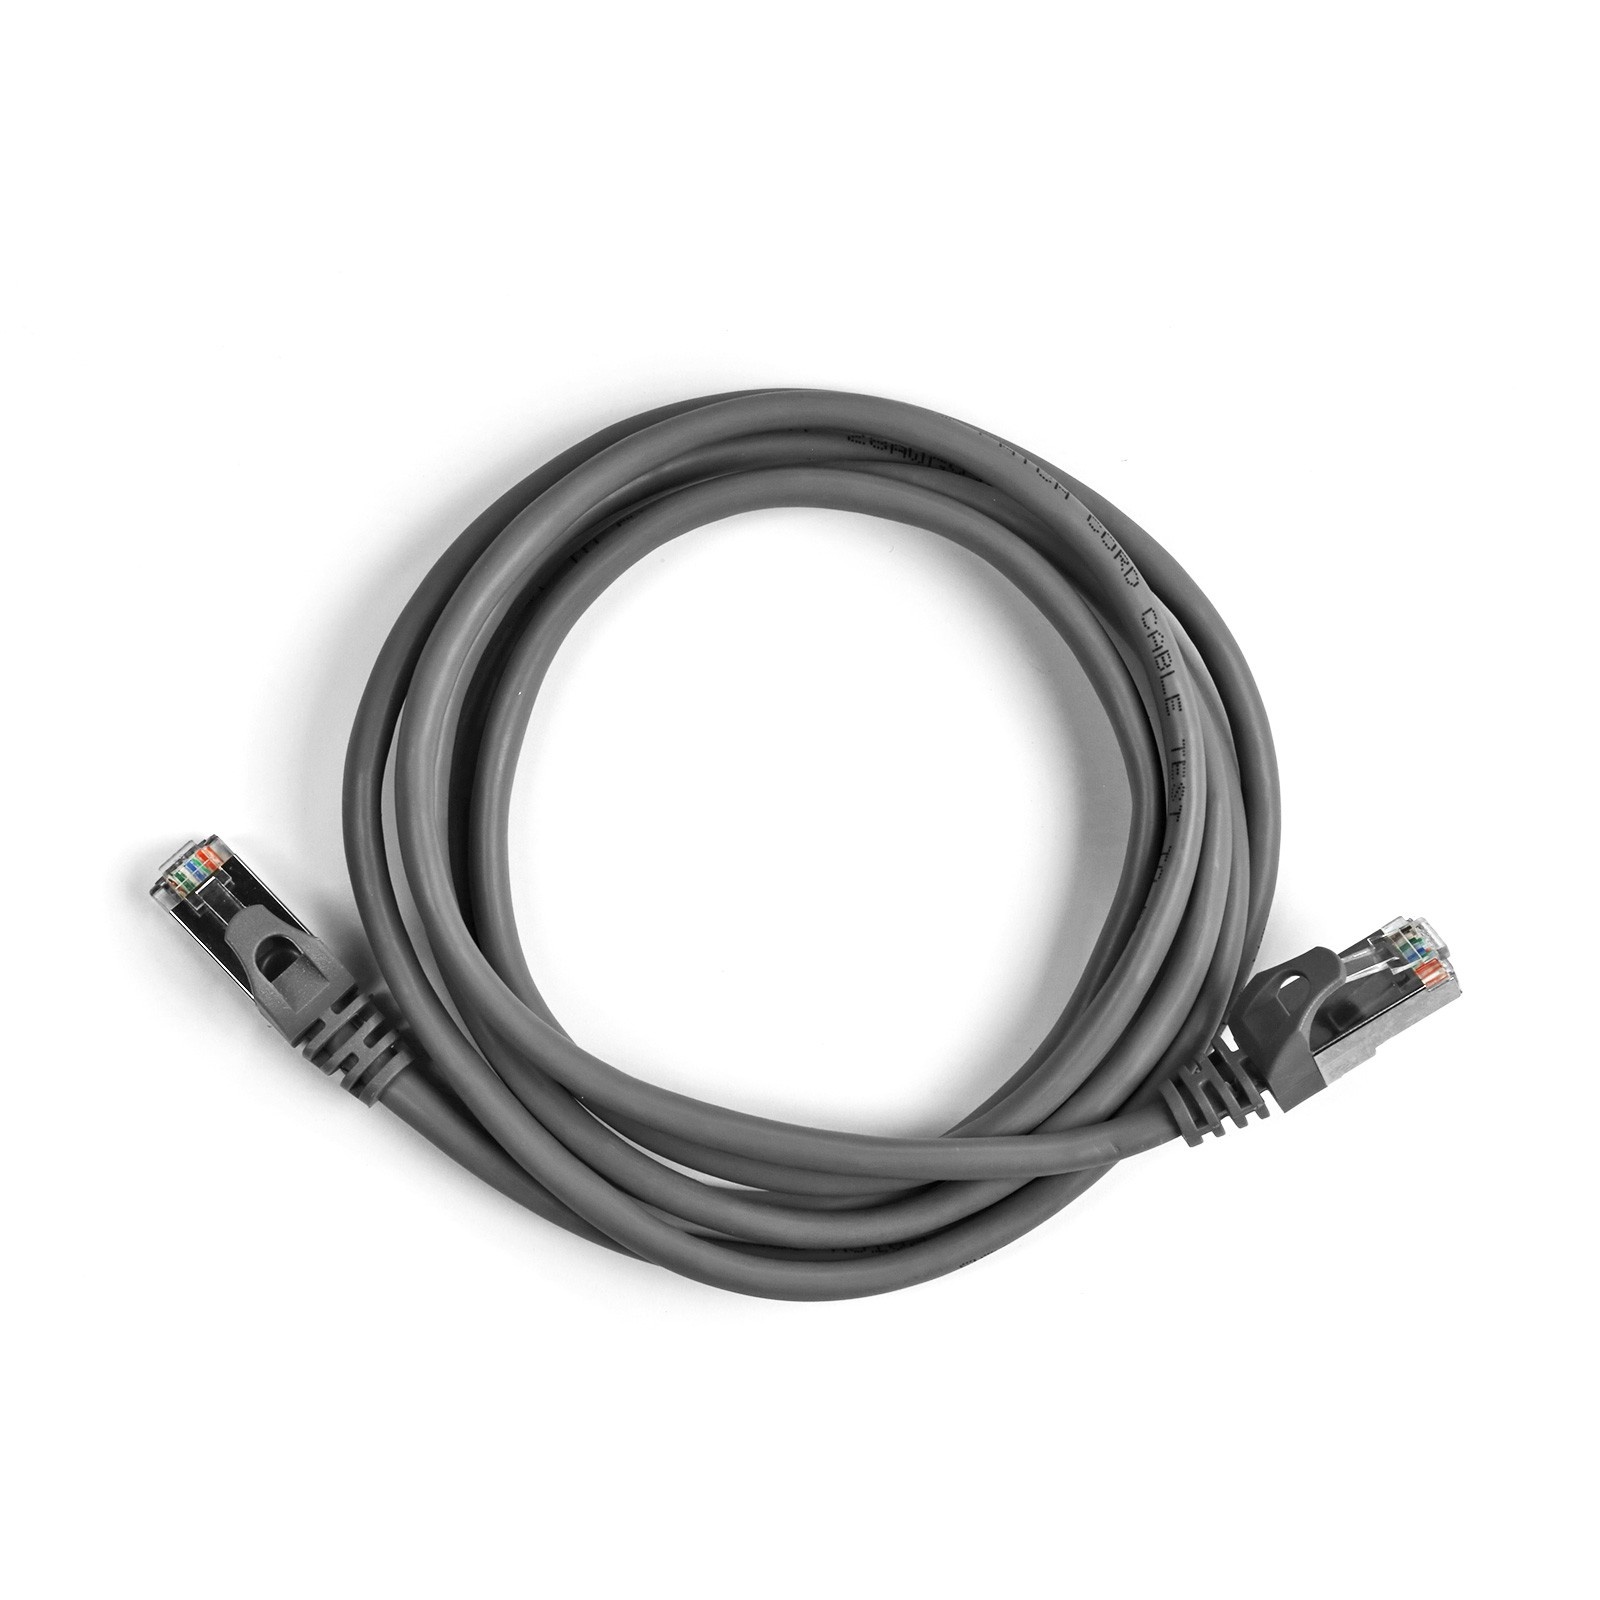 EKON PC power cable schuko plug to 3 pin socket cloverleaf female, cable length 1,5 m